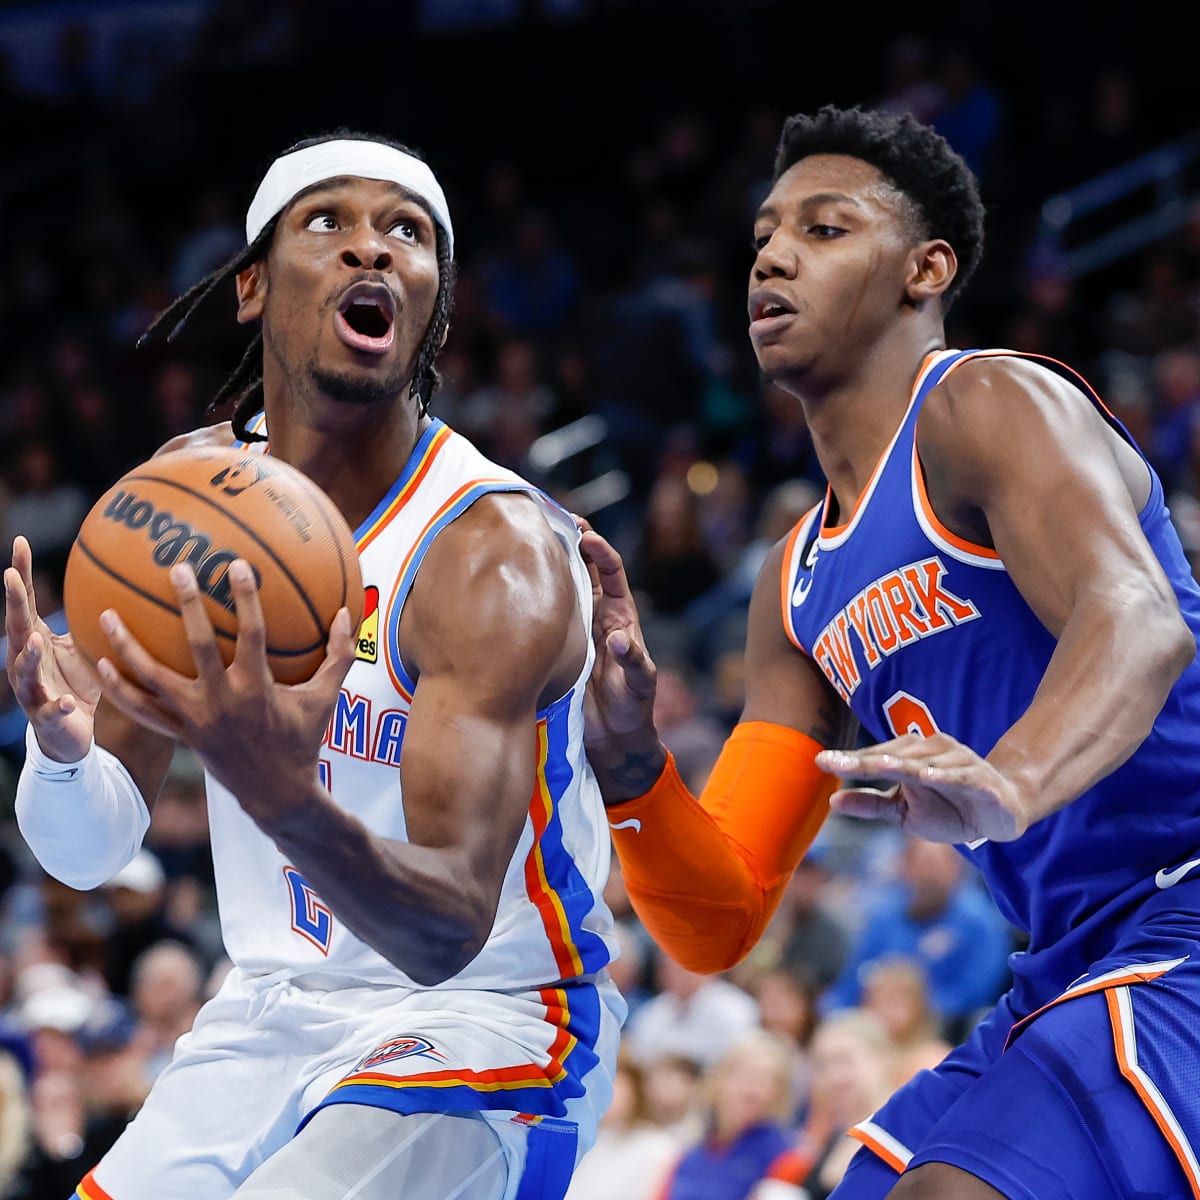 New York Knicks: RJ Barrett is going to be just fine